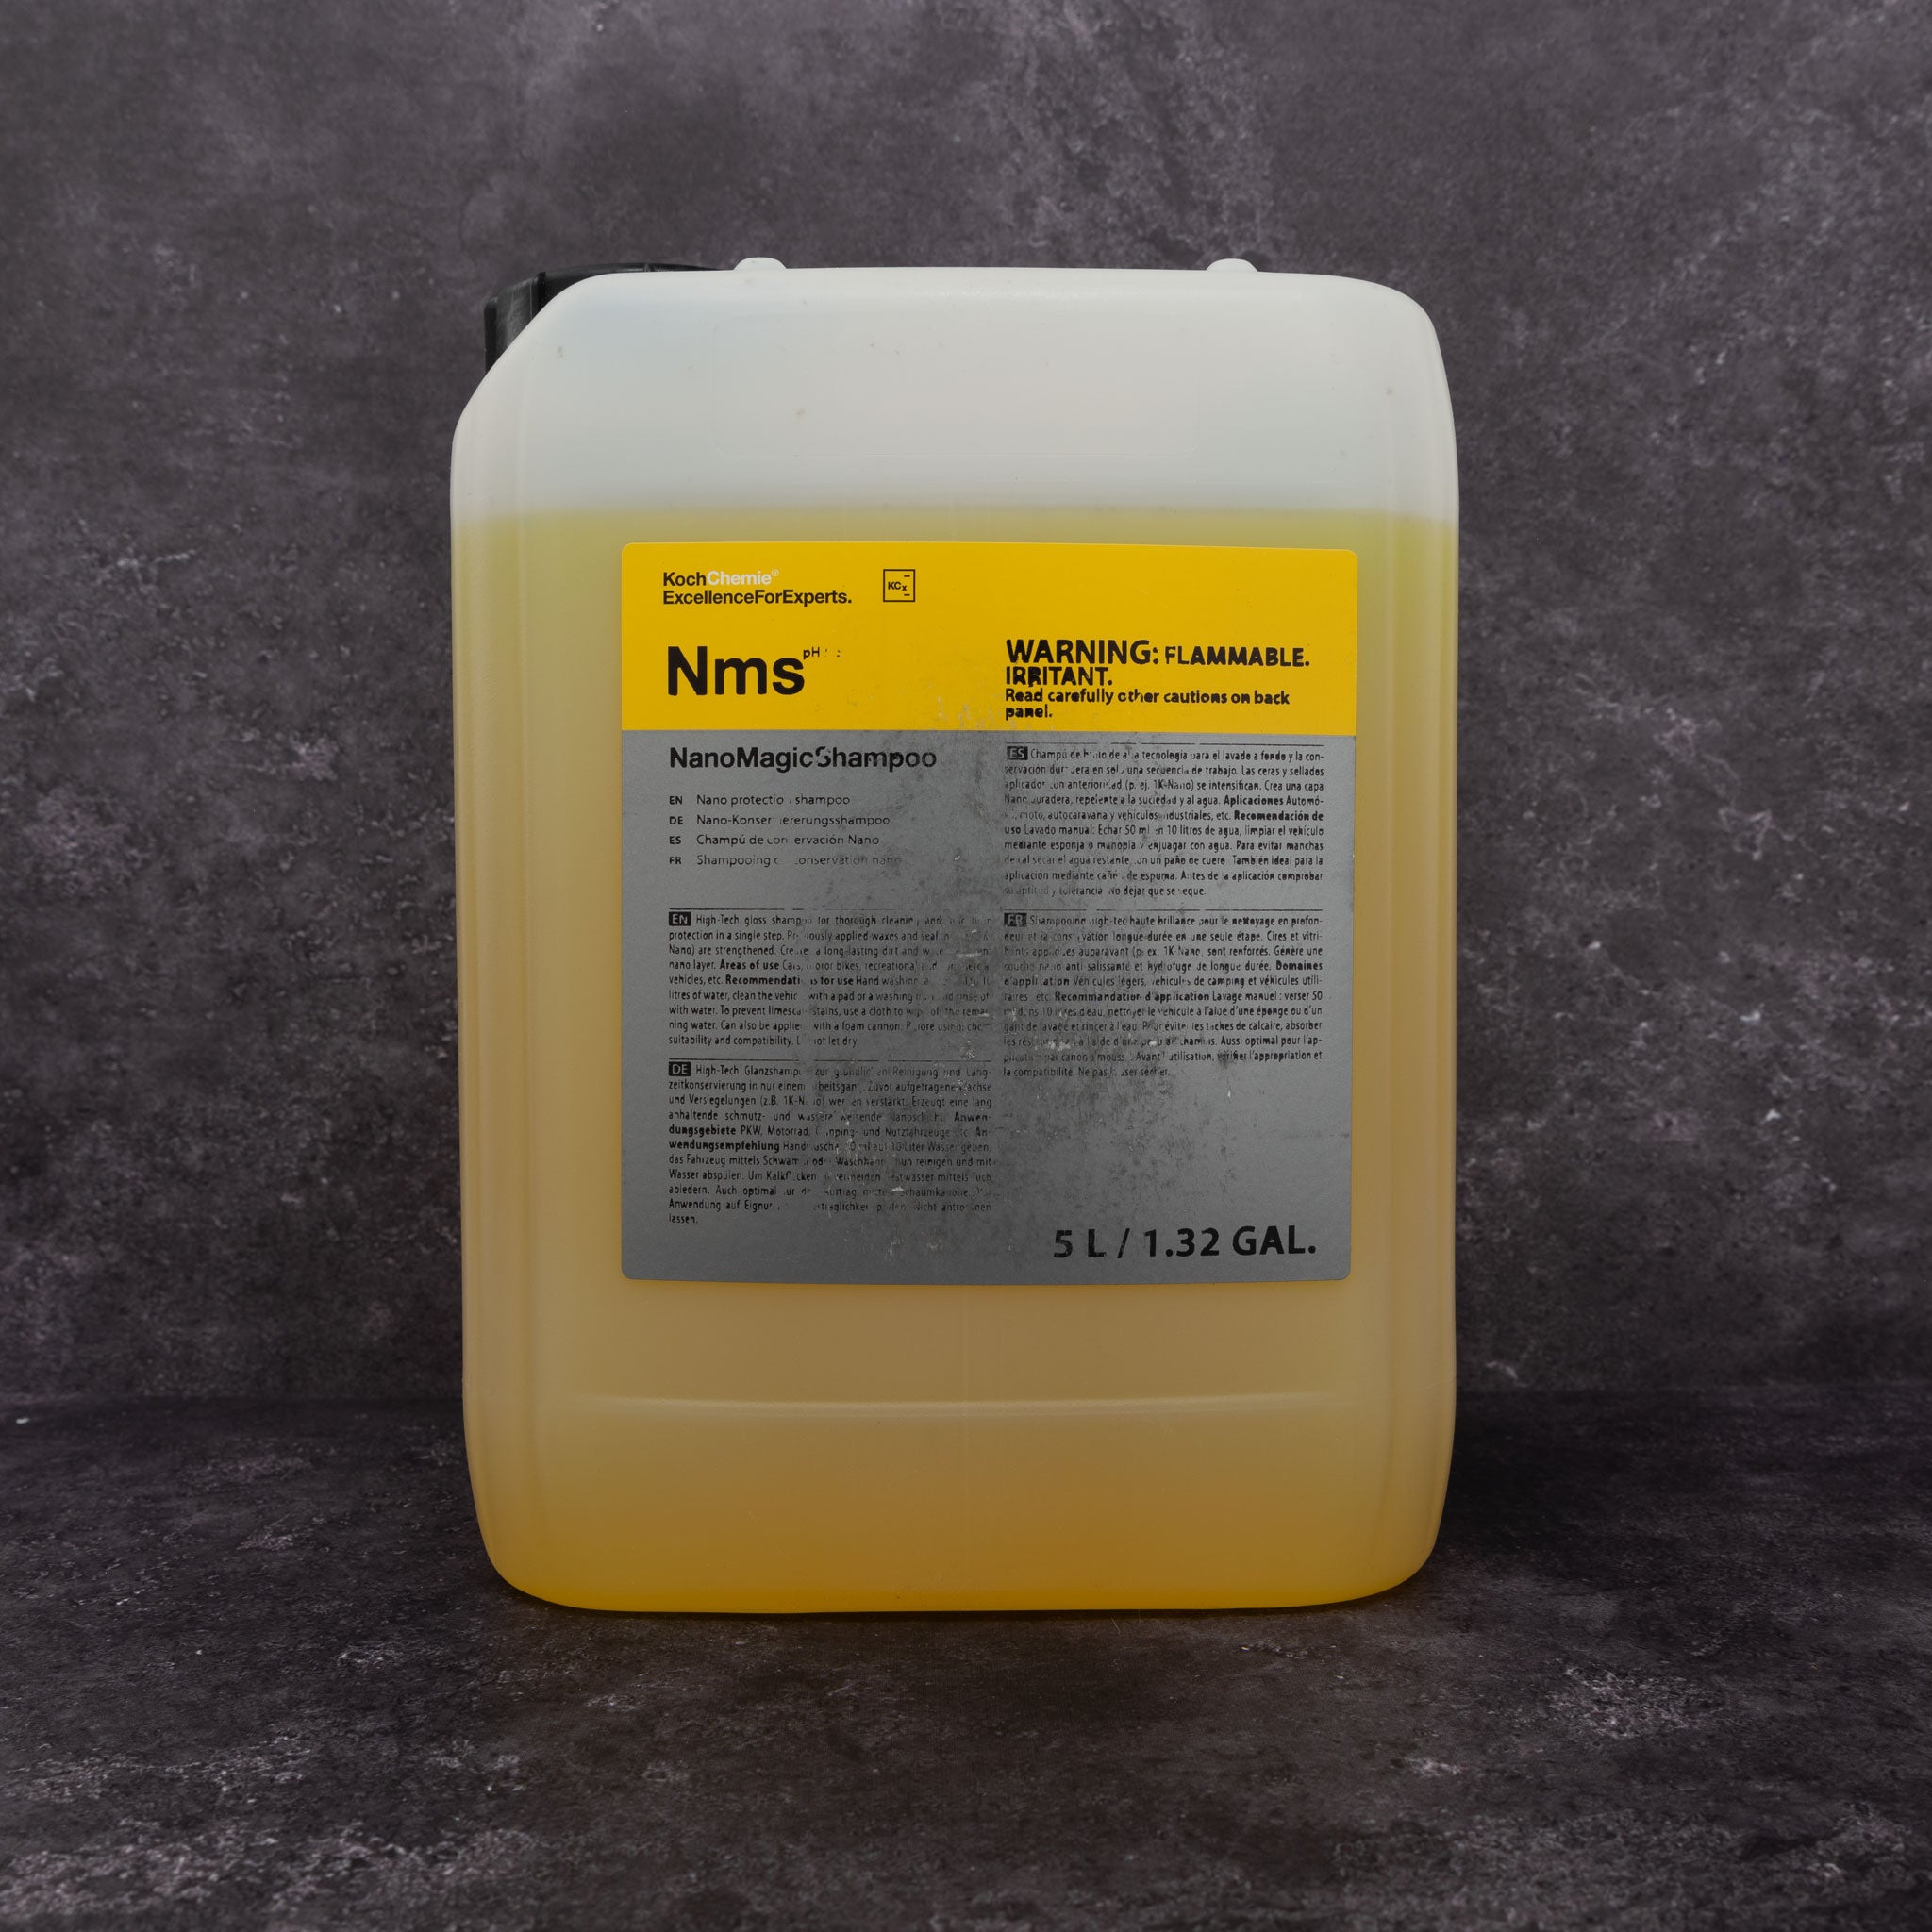 NanoMagic Shampoo (Nms)